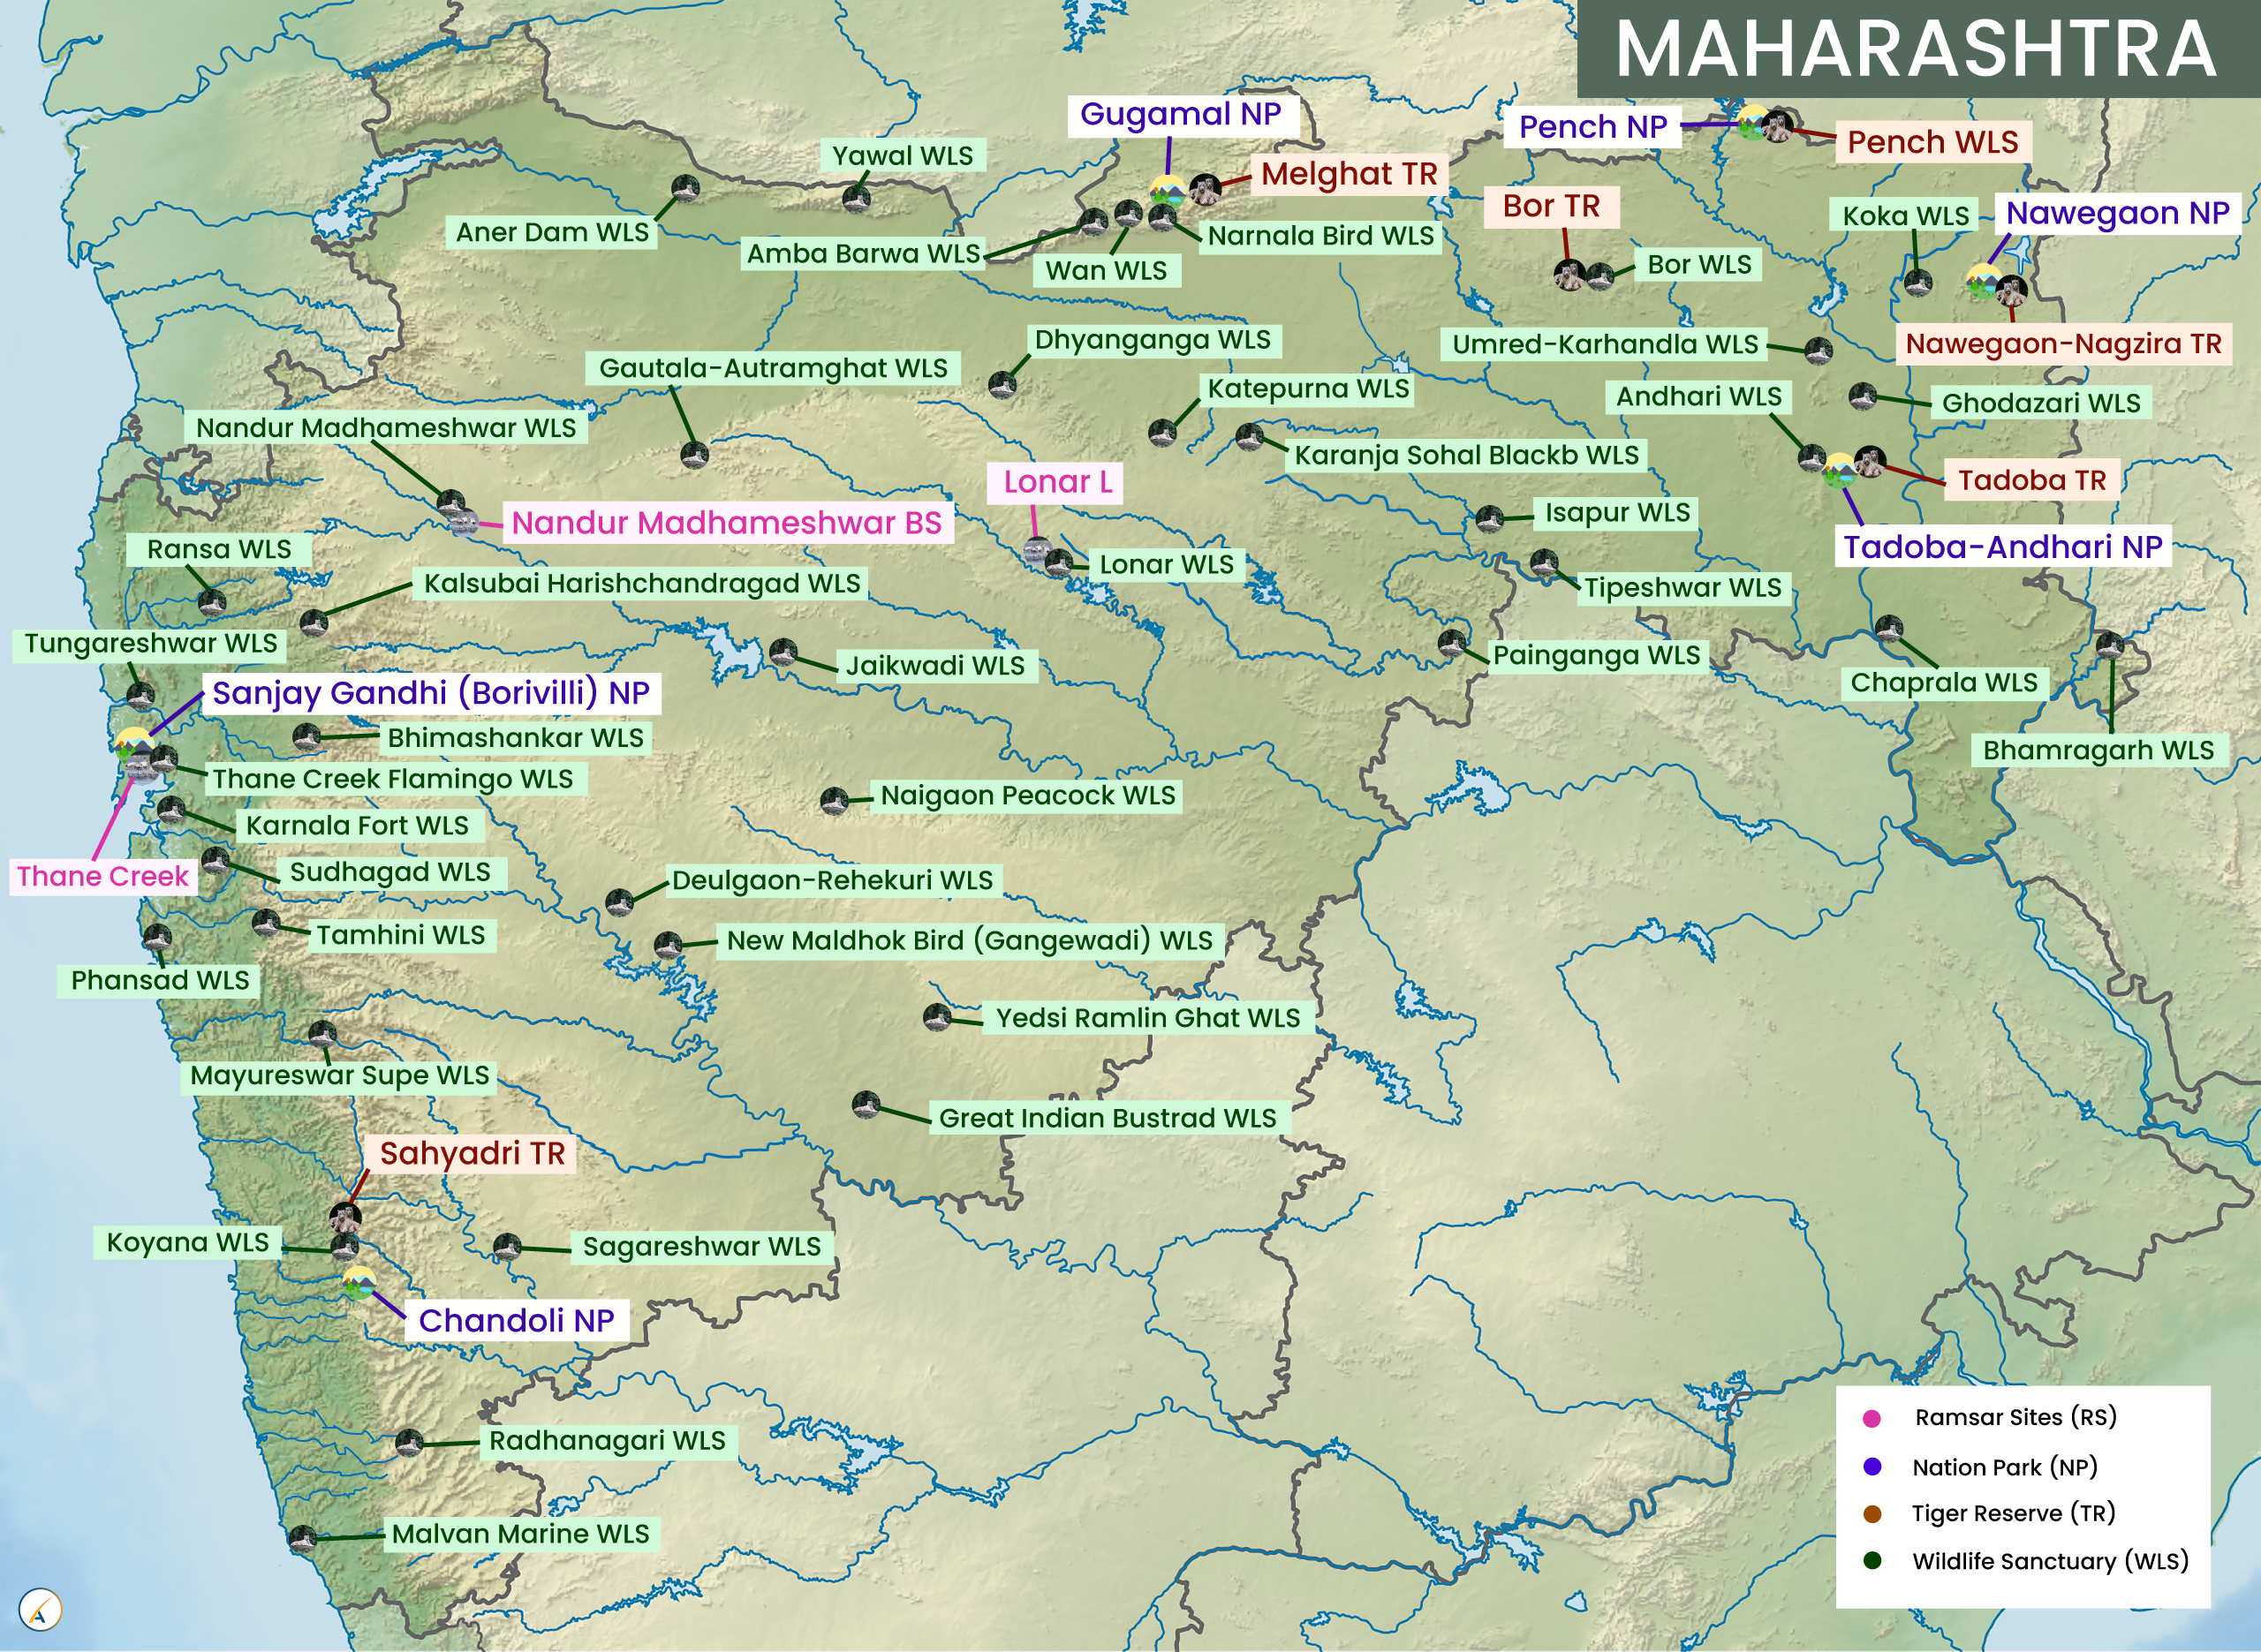 Maharashtra National Parks, Tiger Reserves, Wildlife Sanctuaries & Ramsar Sites Map